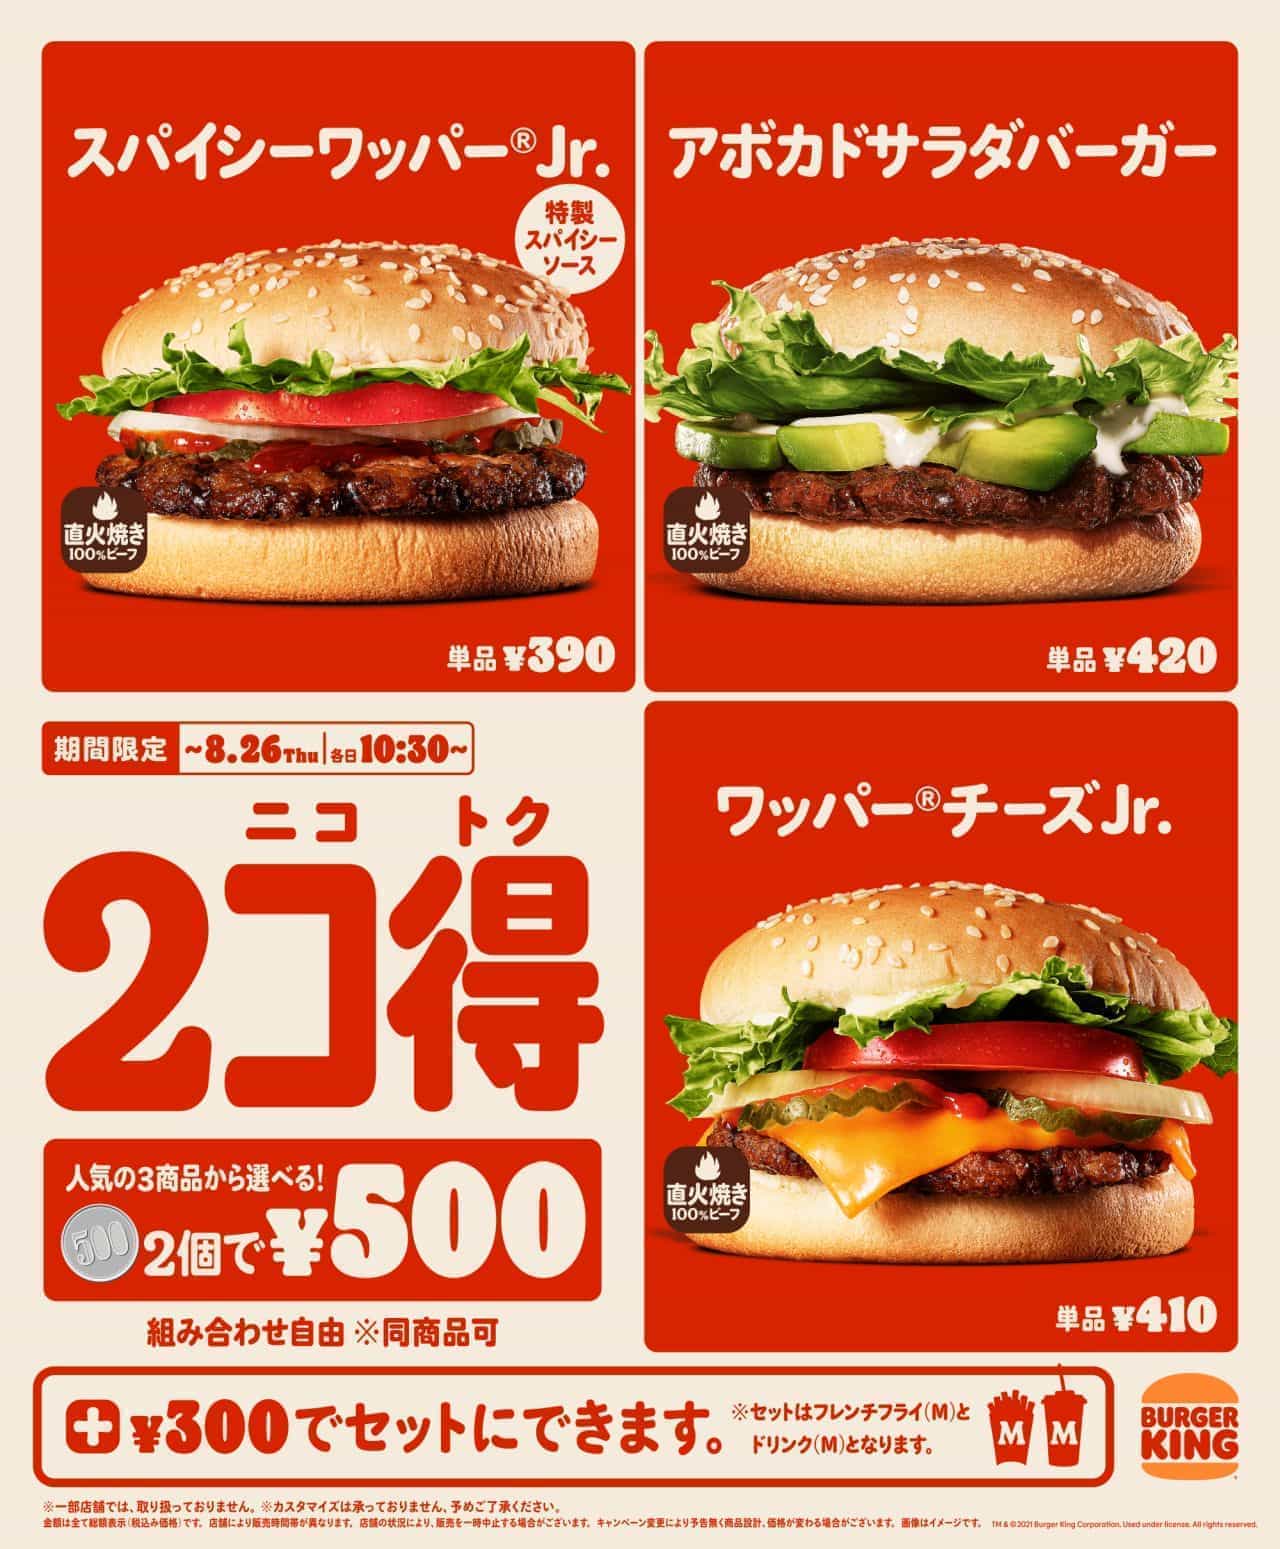 Burger King "2 Kotoku" Campaign